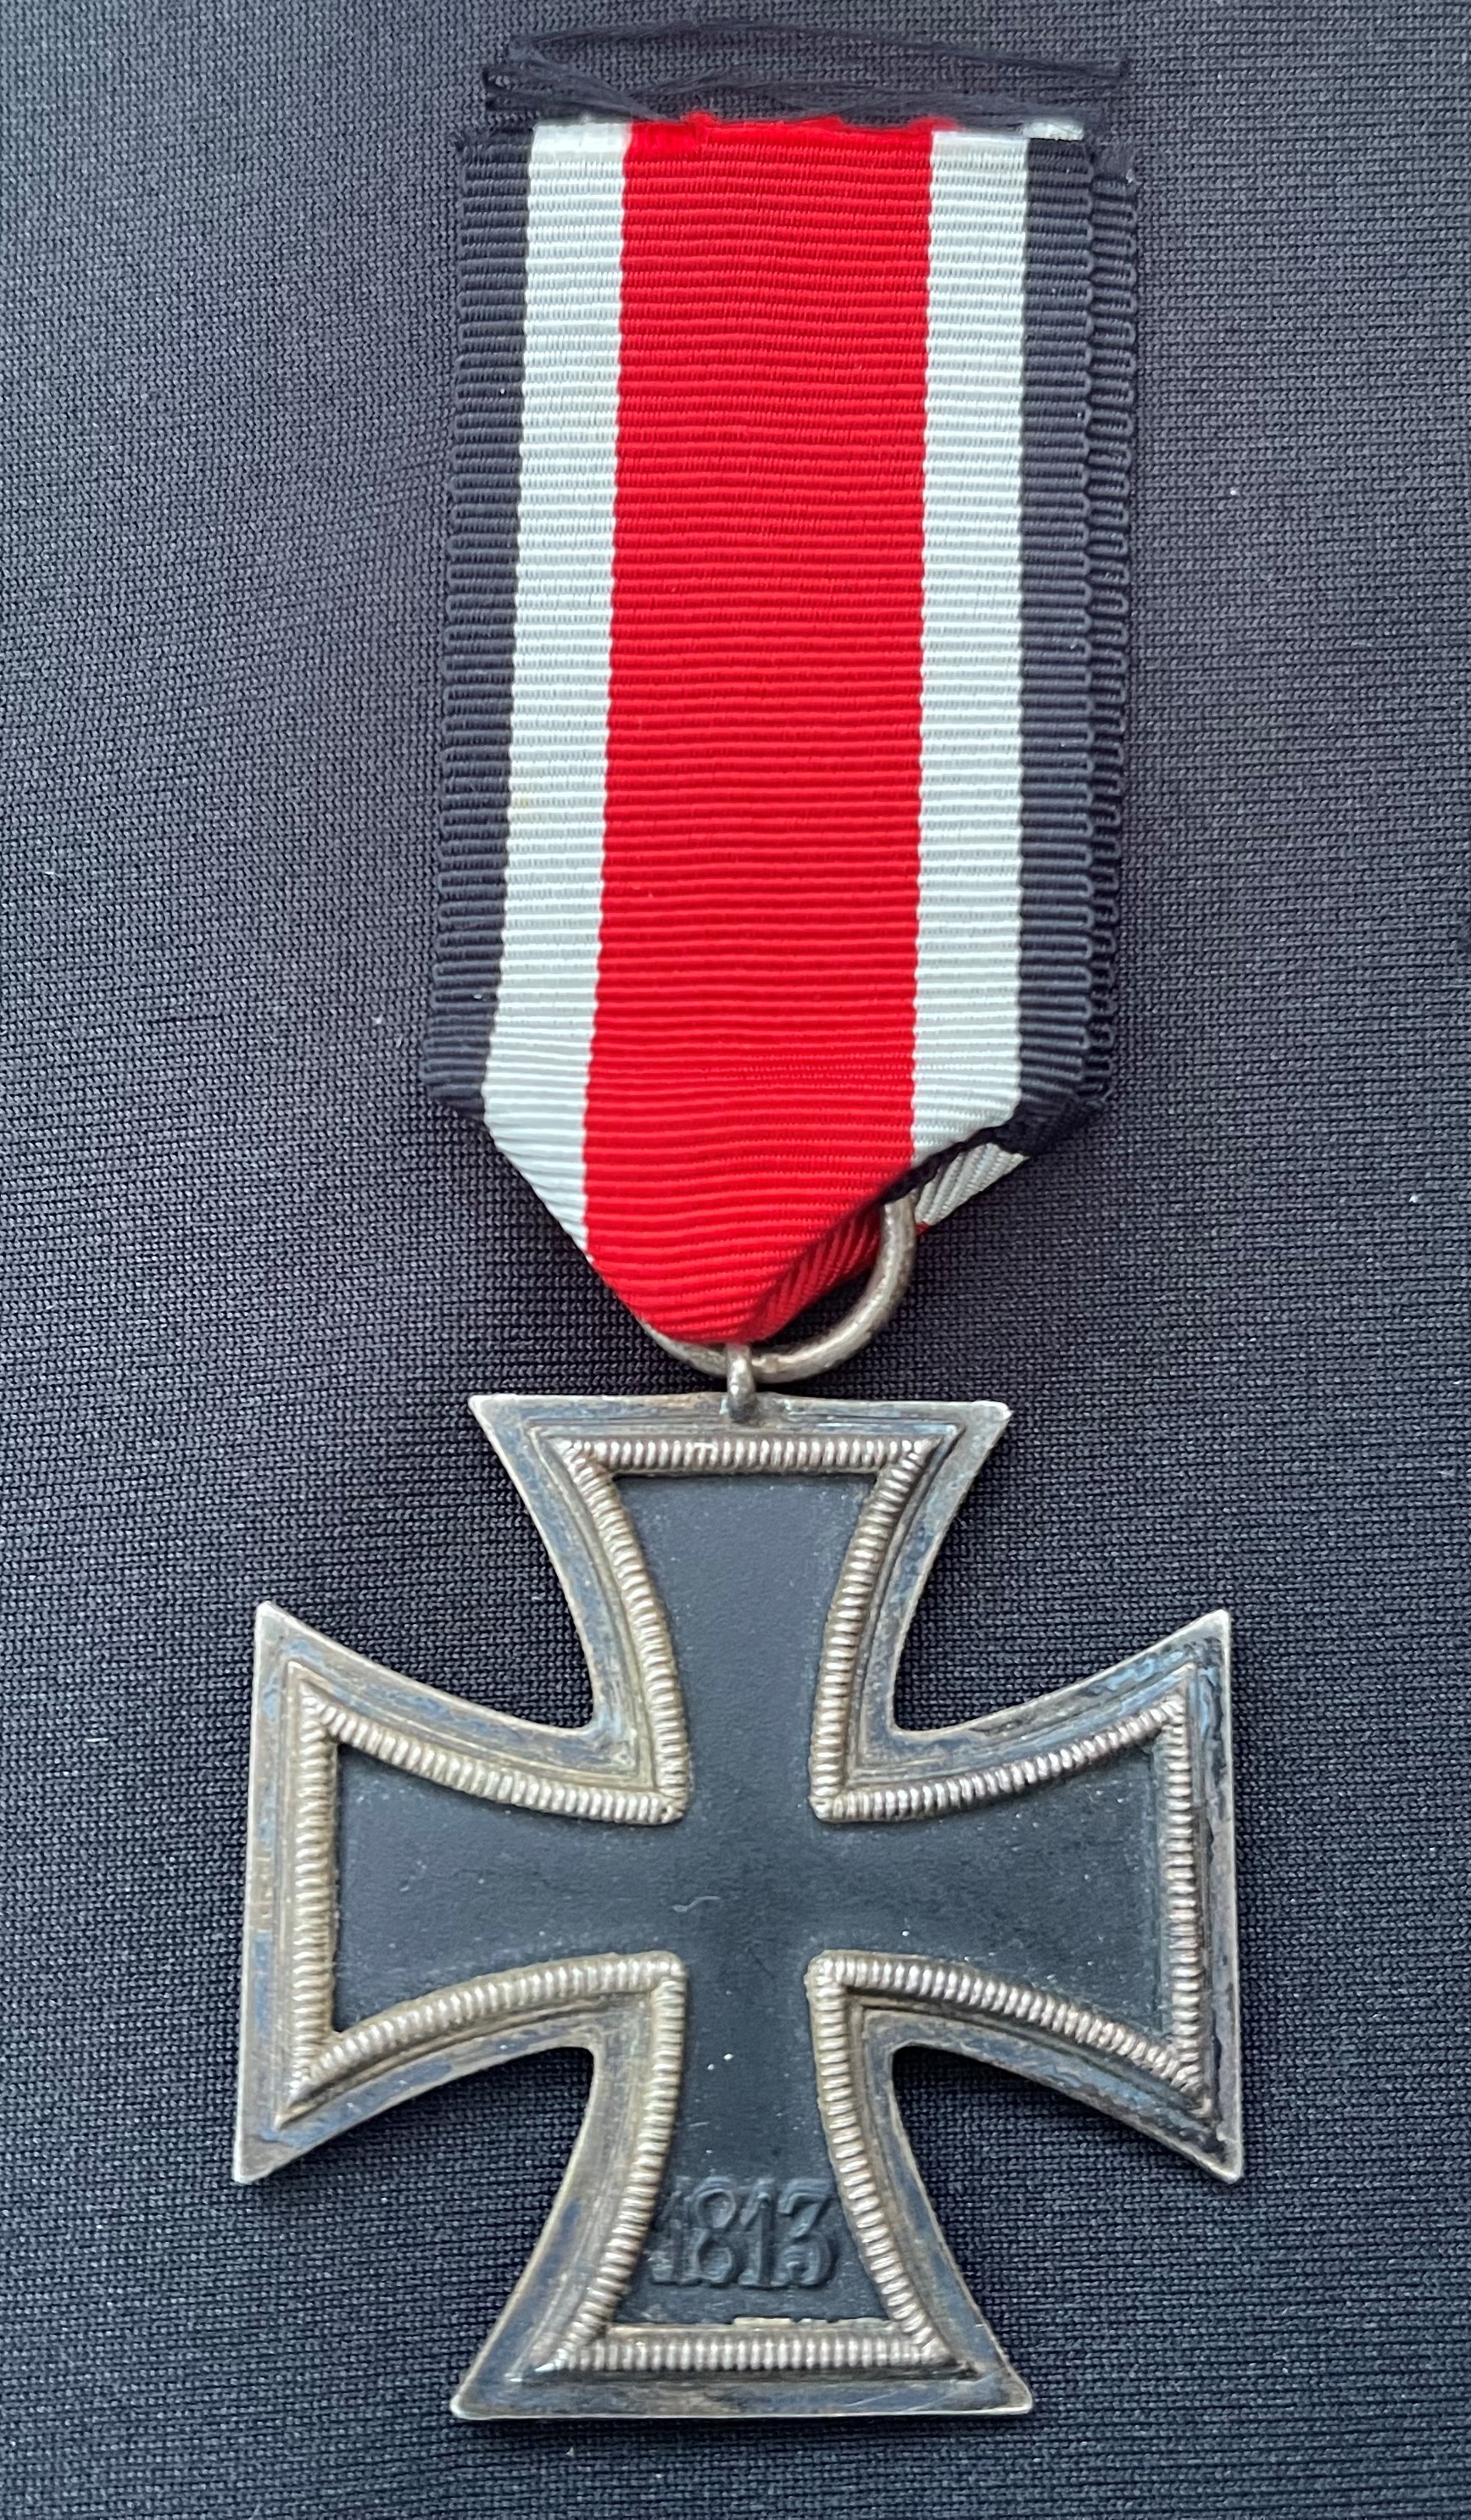 WW2 Third Reich Eisernes Kreuz 2. Klasse. Iron Cross 2nd class 1939. Maker mark to ring "55" for "JE - Image 2 of 3